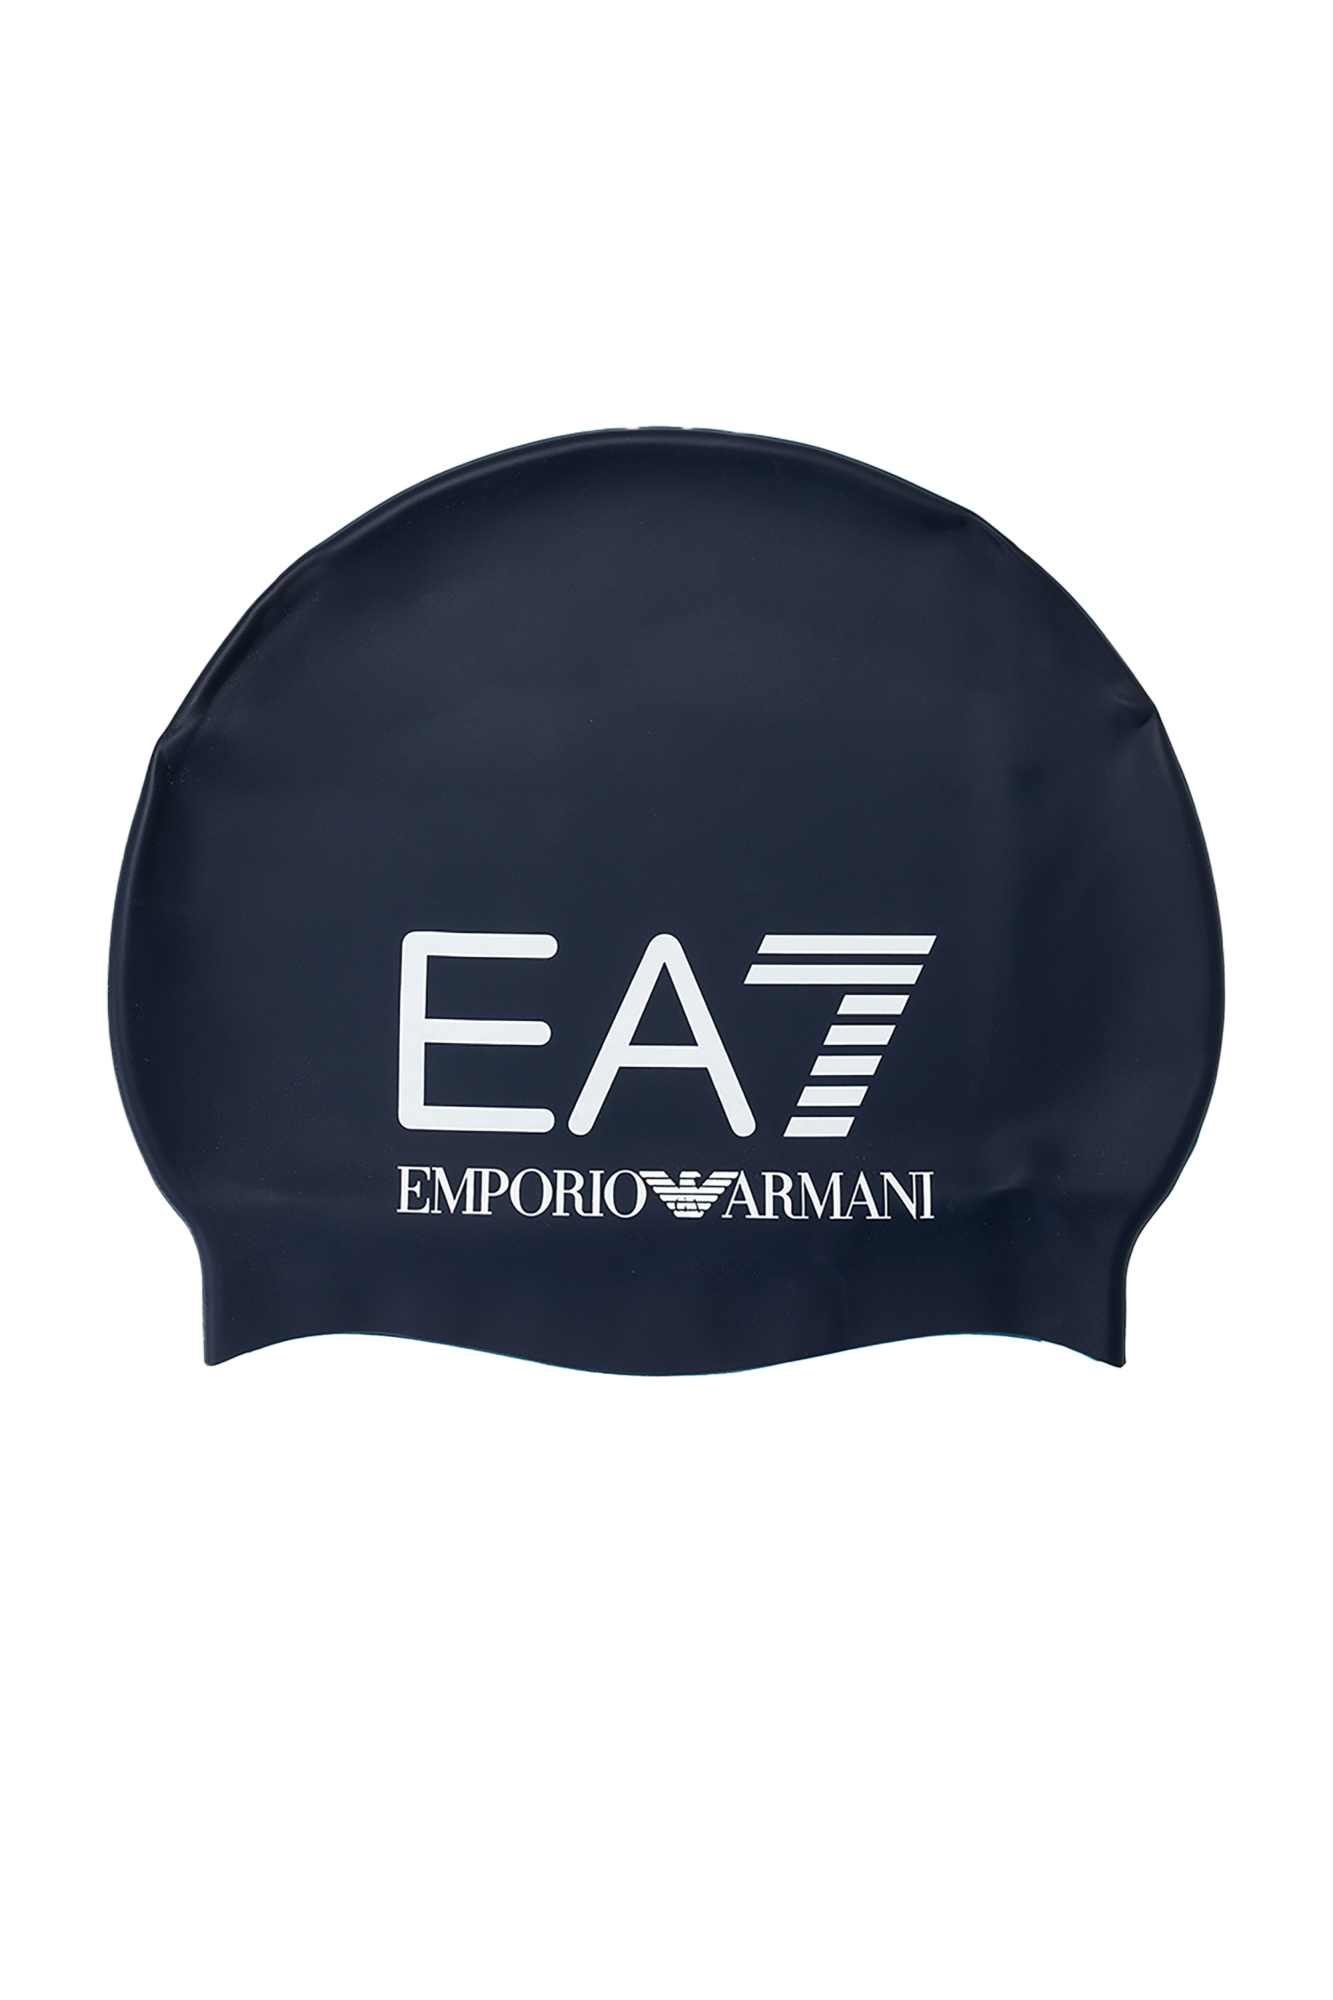 EMPORIO ARMANI X Reebok EA7 Runner 7 collection automne hiver 2011 Swimming cap with logo